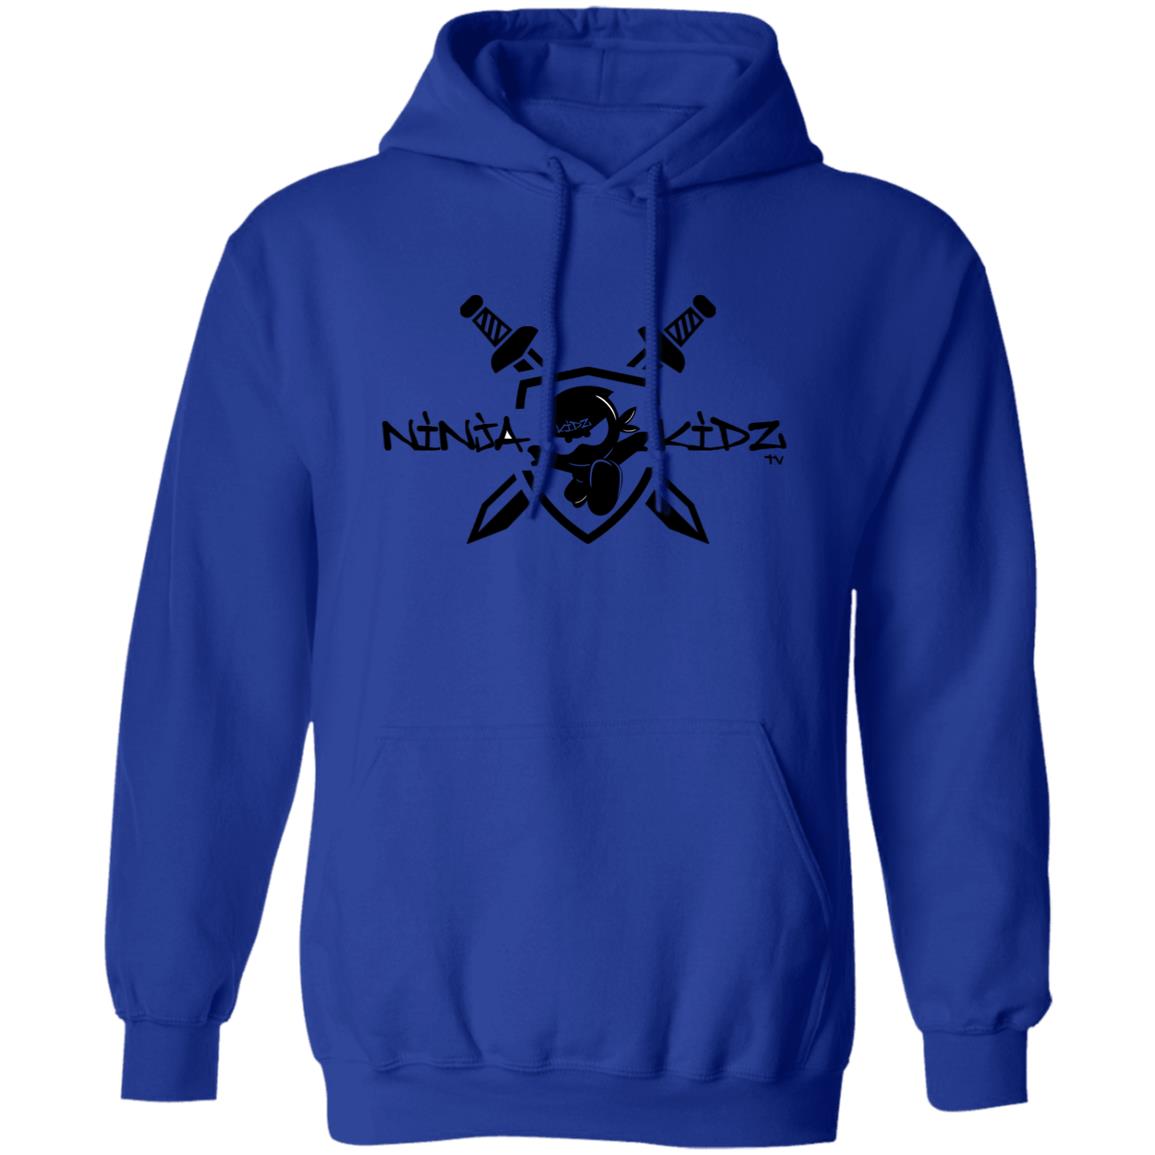 Original ninja kids merch ninja shield shirt hoodie, tank top, unisex  sweater